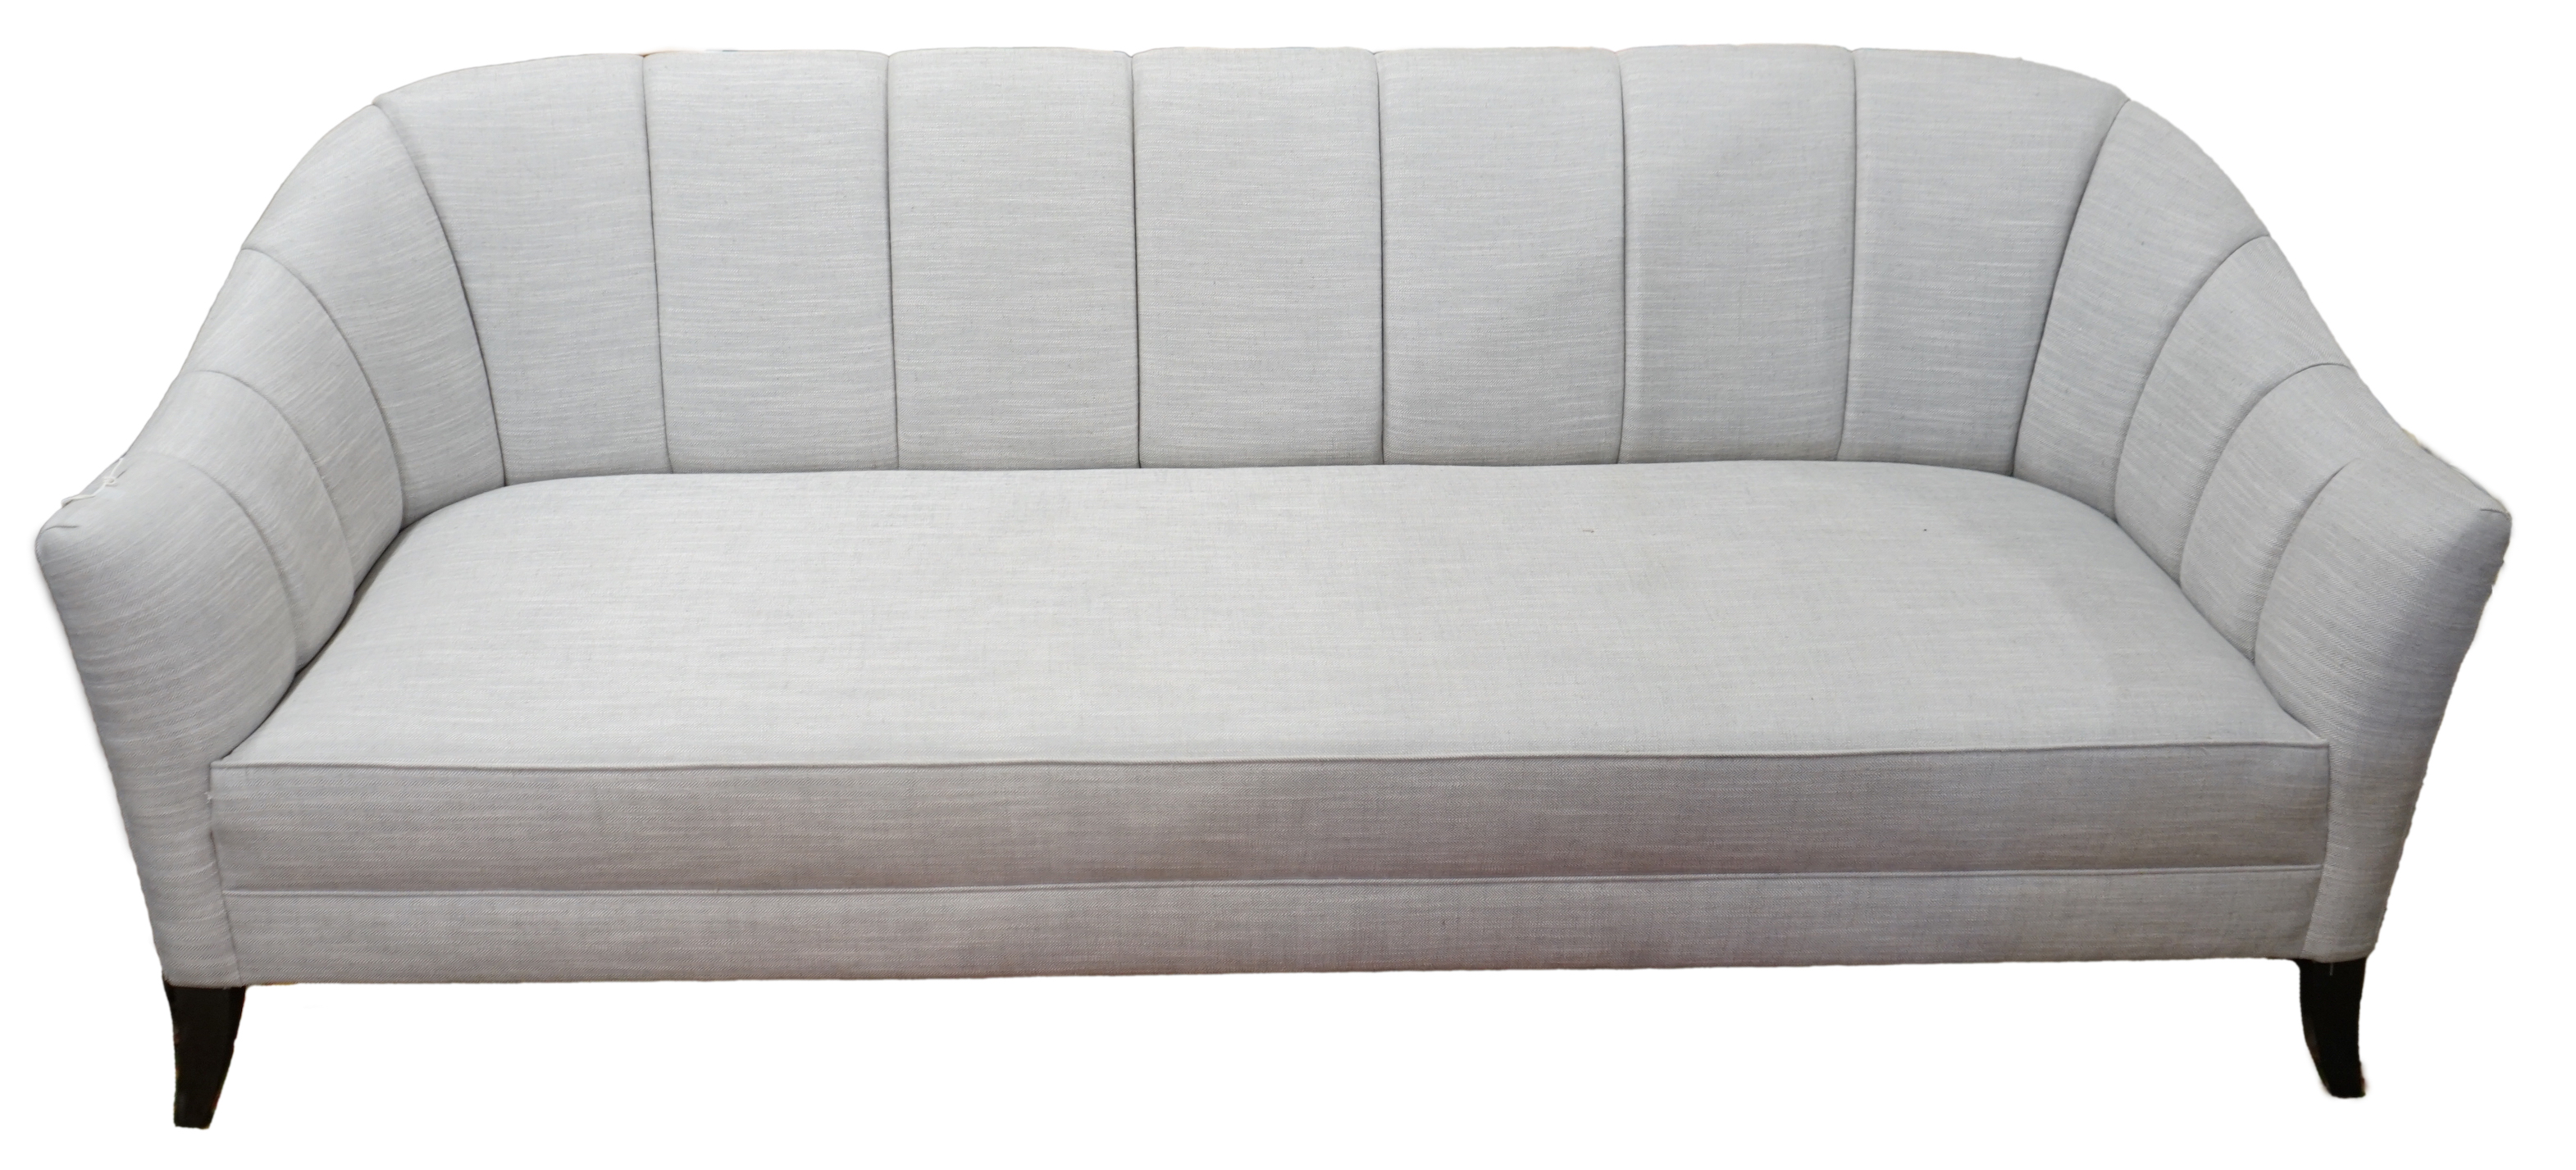 A Bray Design channel back settee in Sahco flint fabric, width 210cm, depth 84cm, height 83cm